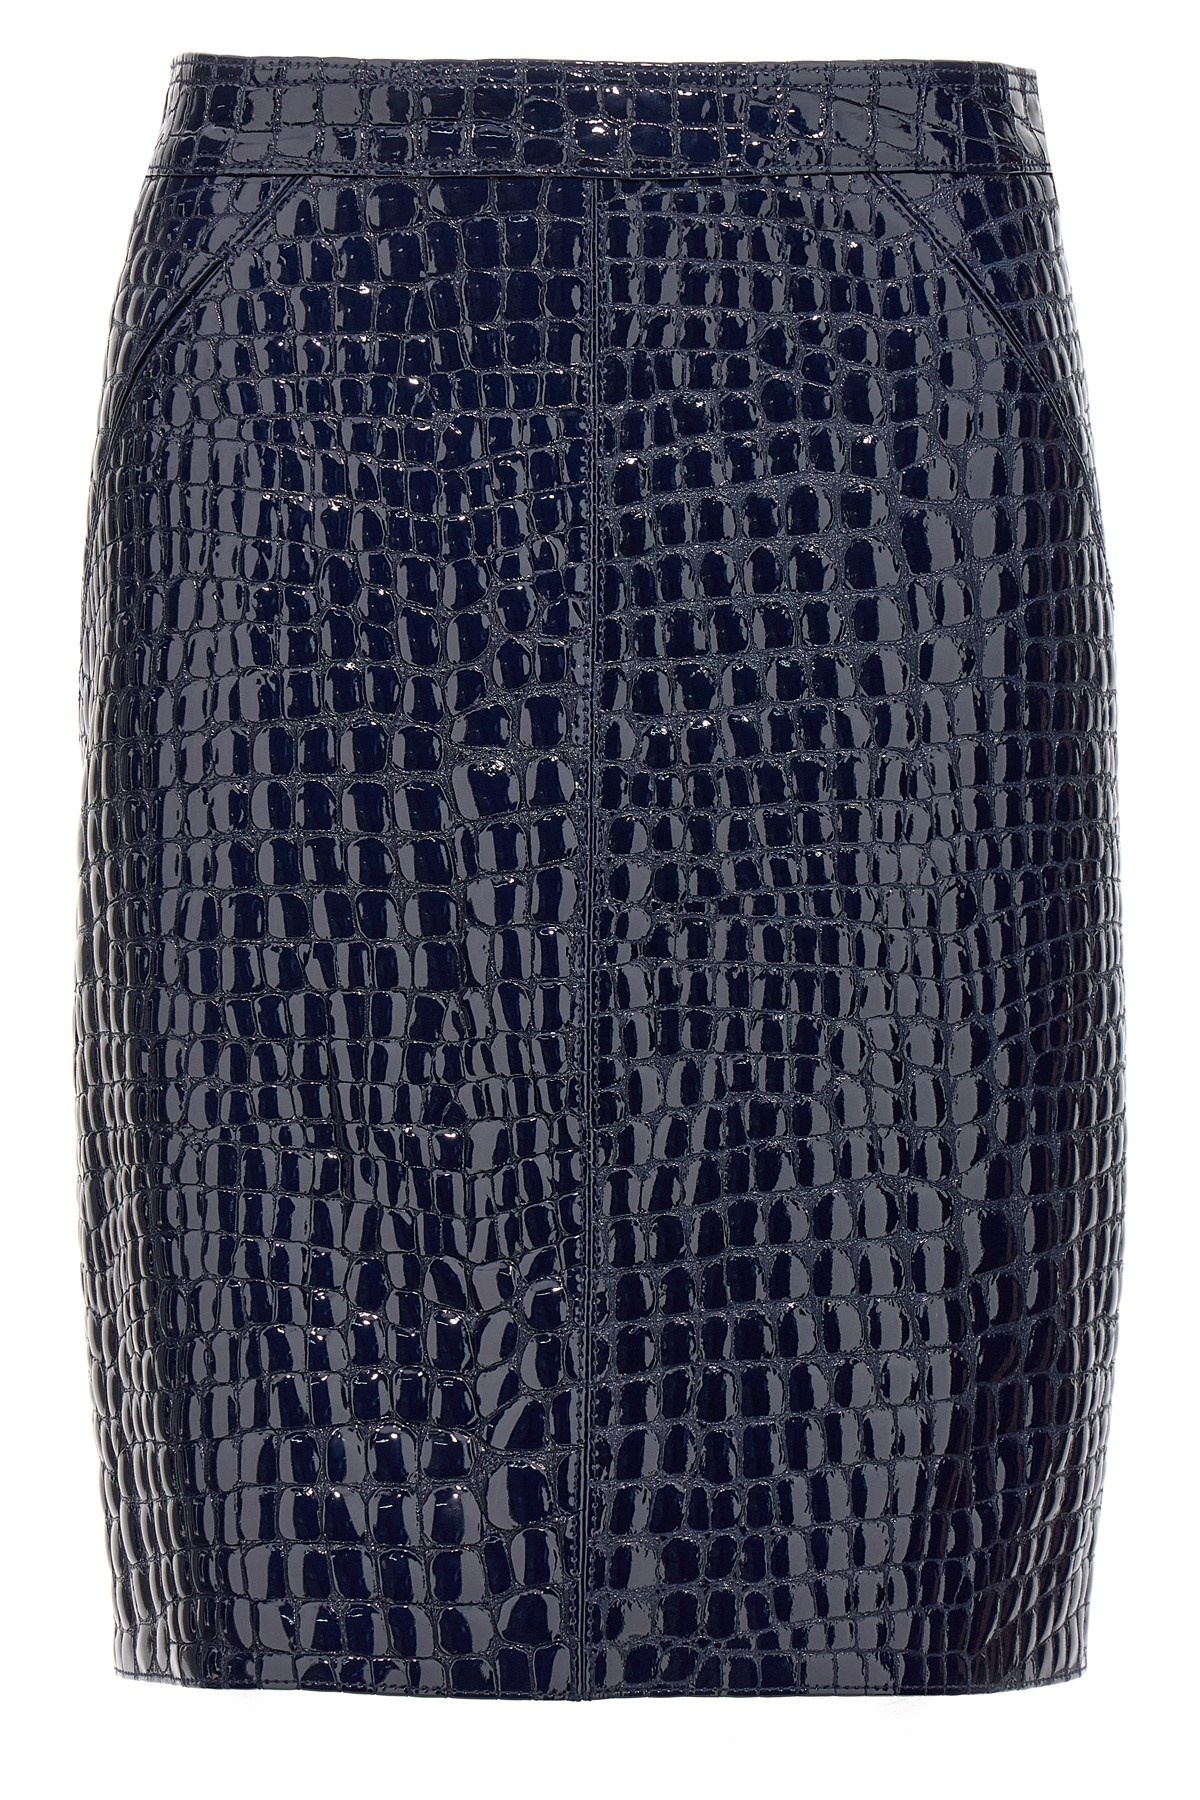 Croc print skirt - 2